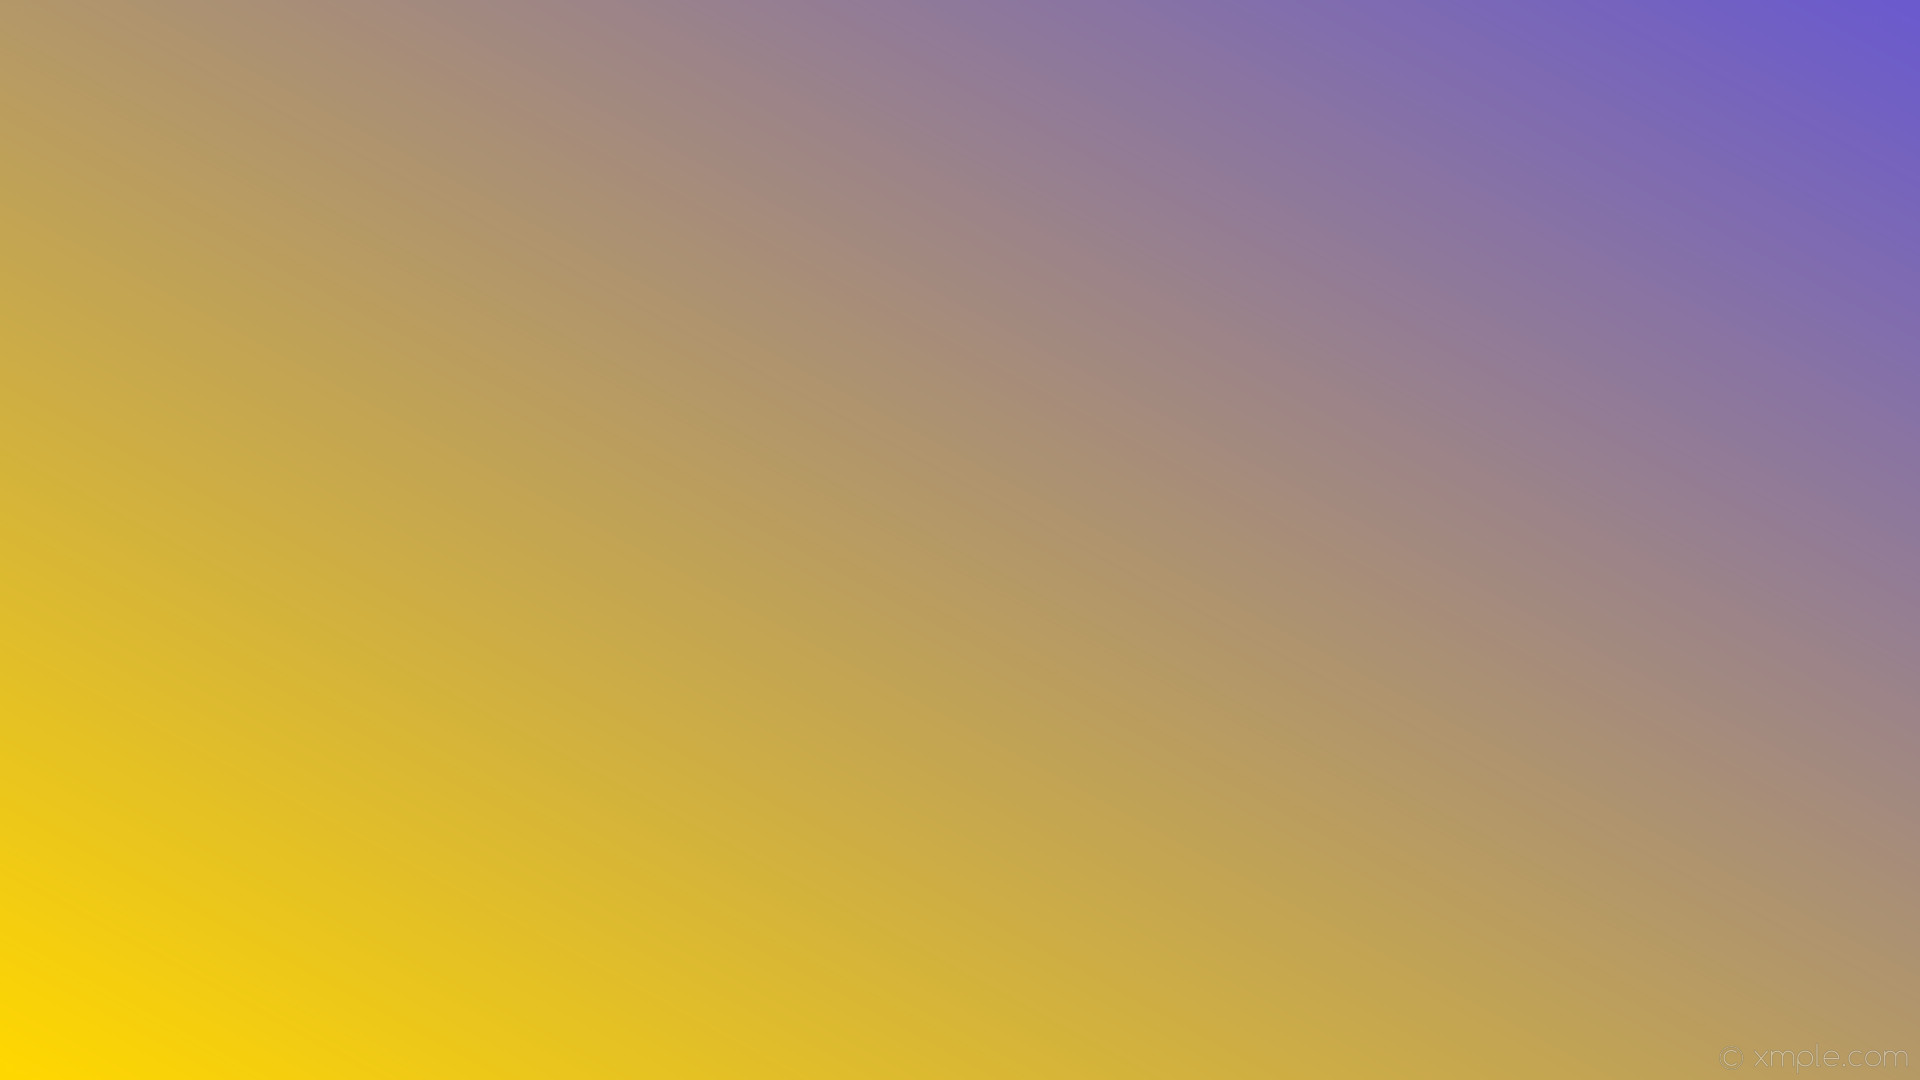 1920x1080 wallpaper gradient yellow purple linear slate blue gold #6a5acd #ffd700 30Â°